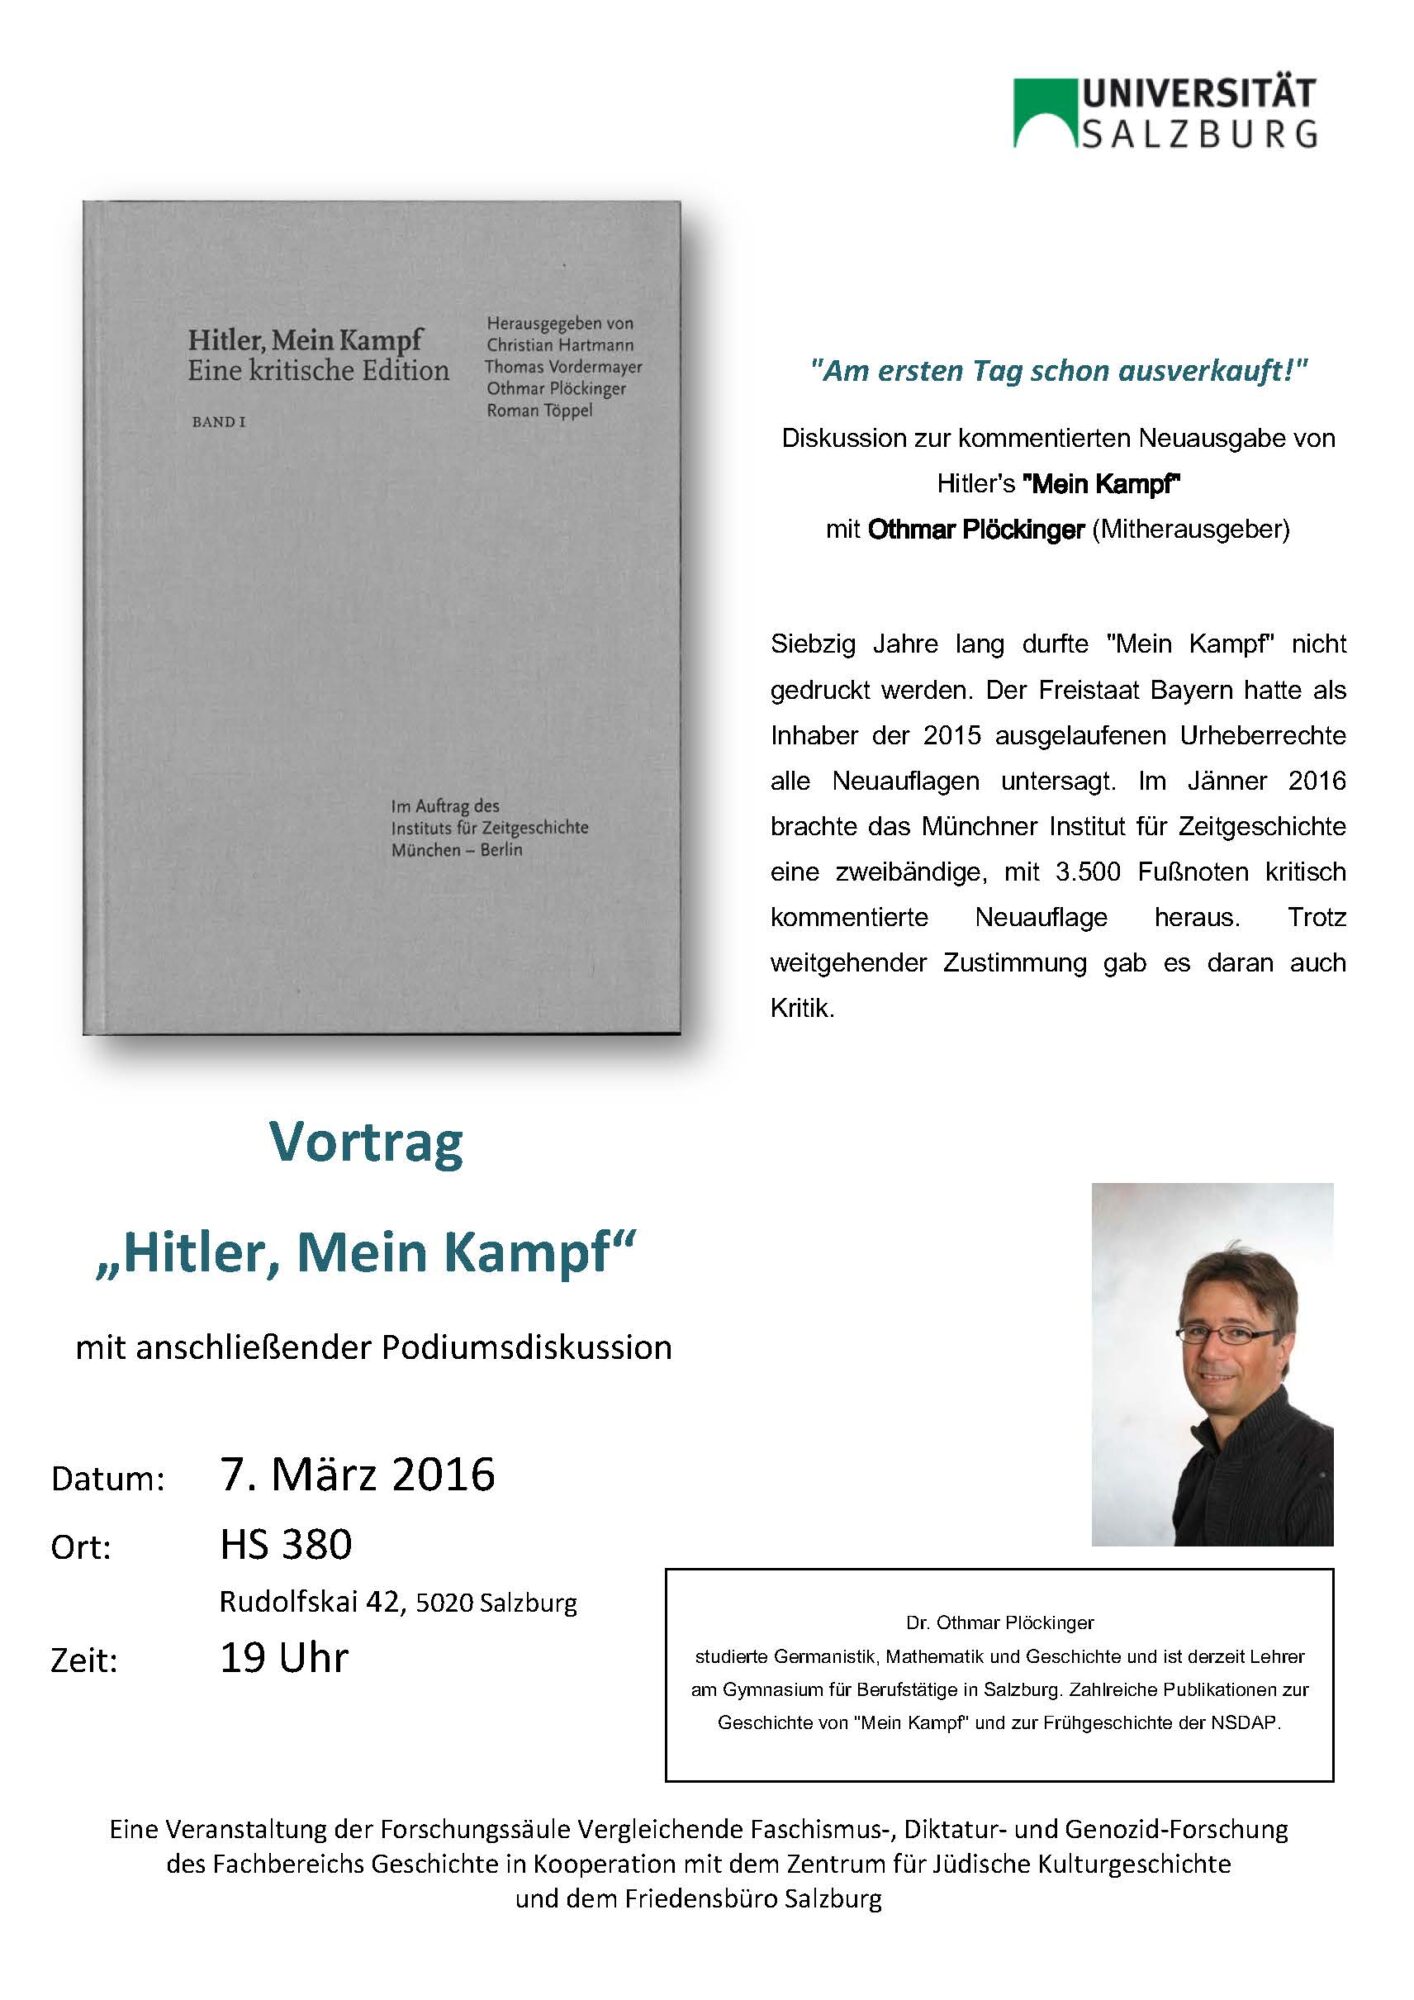 Plakat zur Podiumsdiskussion mir Dr. Othmar Plöckinger